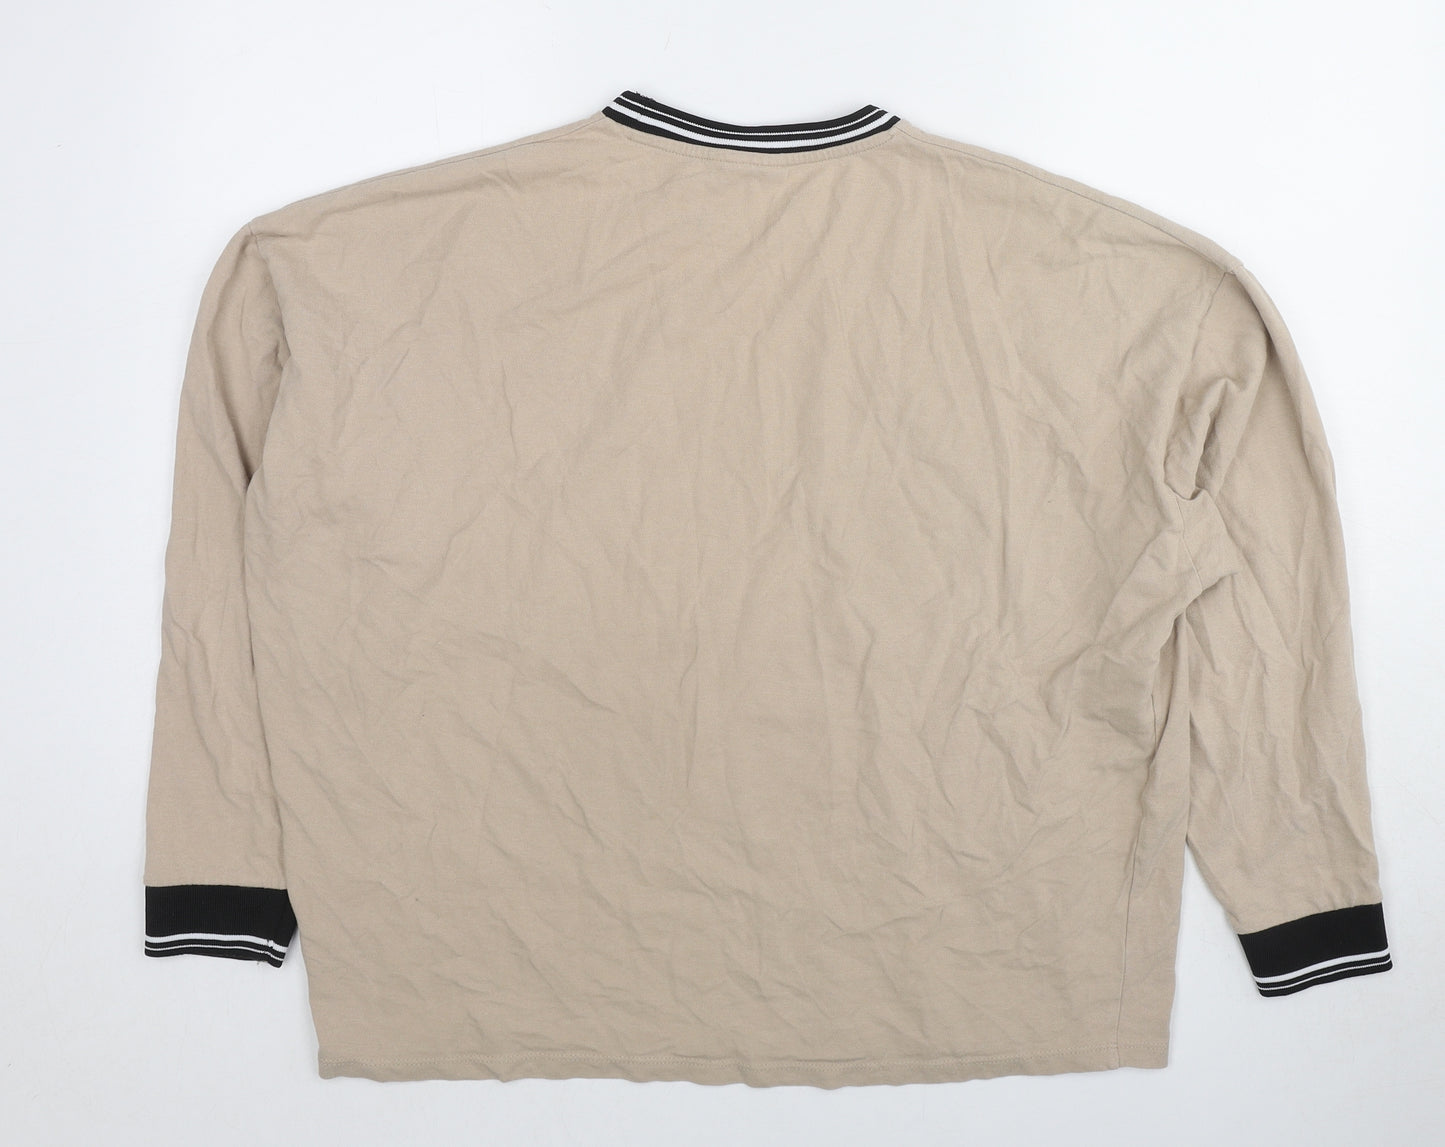 ASOS Mens Brown Cotton Pullover Sweatshirt Size S